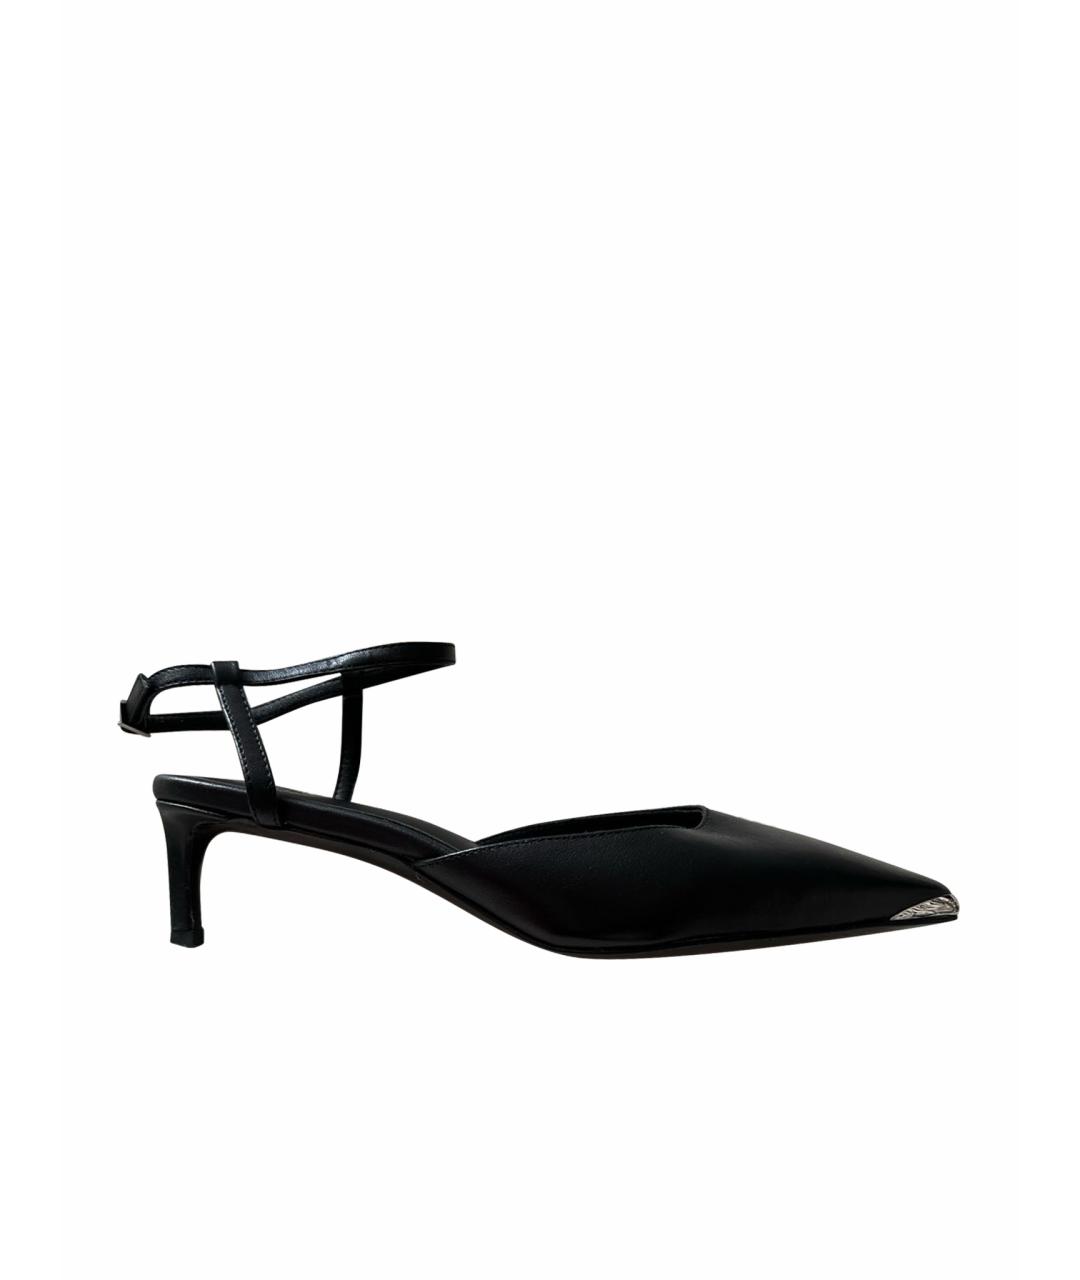 CELINE PRE-OWNED Черные кожаные лодочки на низком каблуке, фото 1